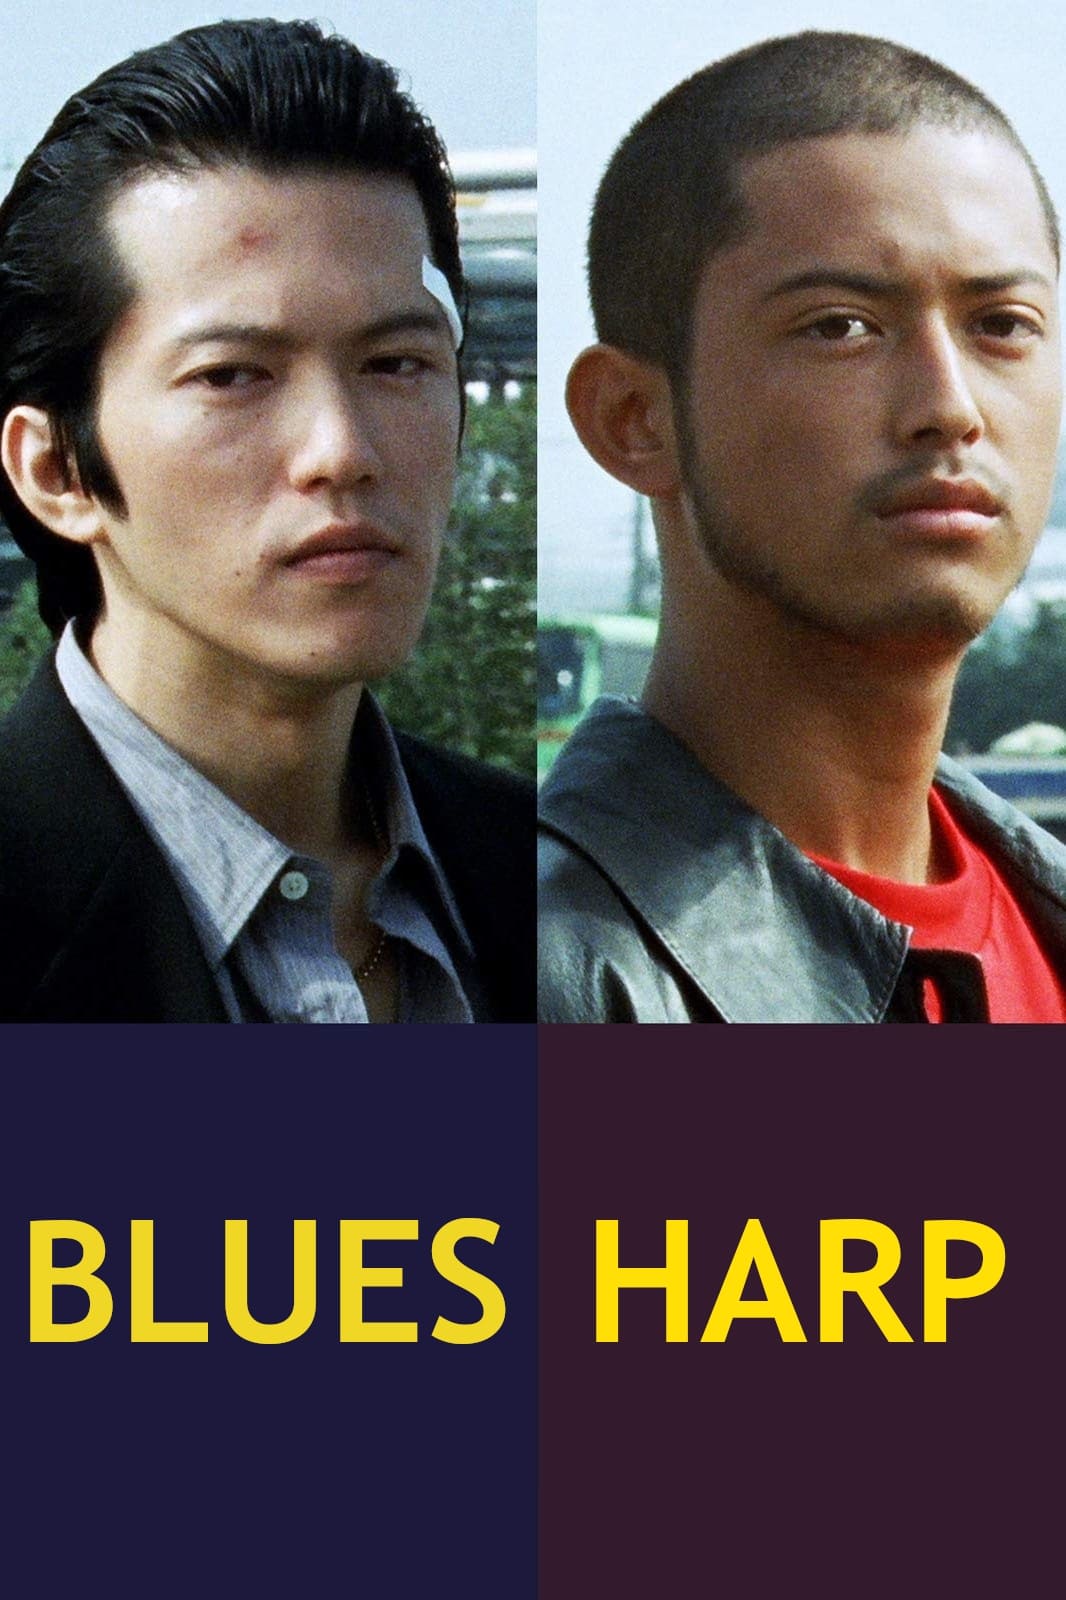 Blues Harp (1998)